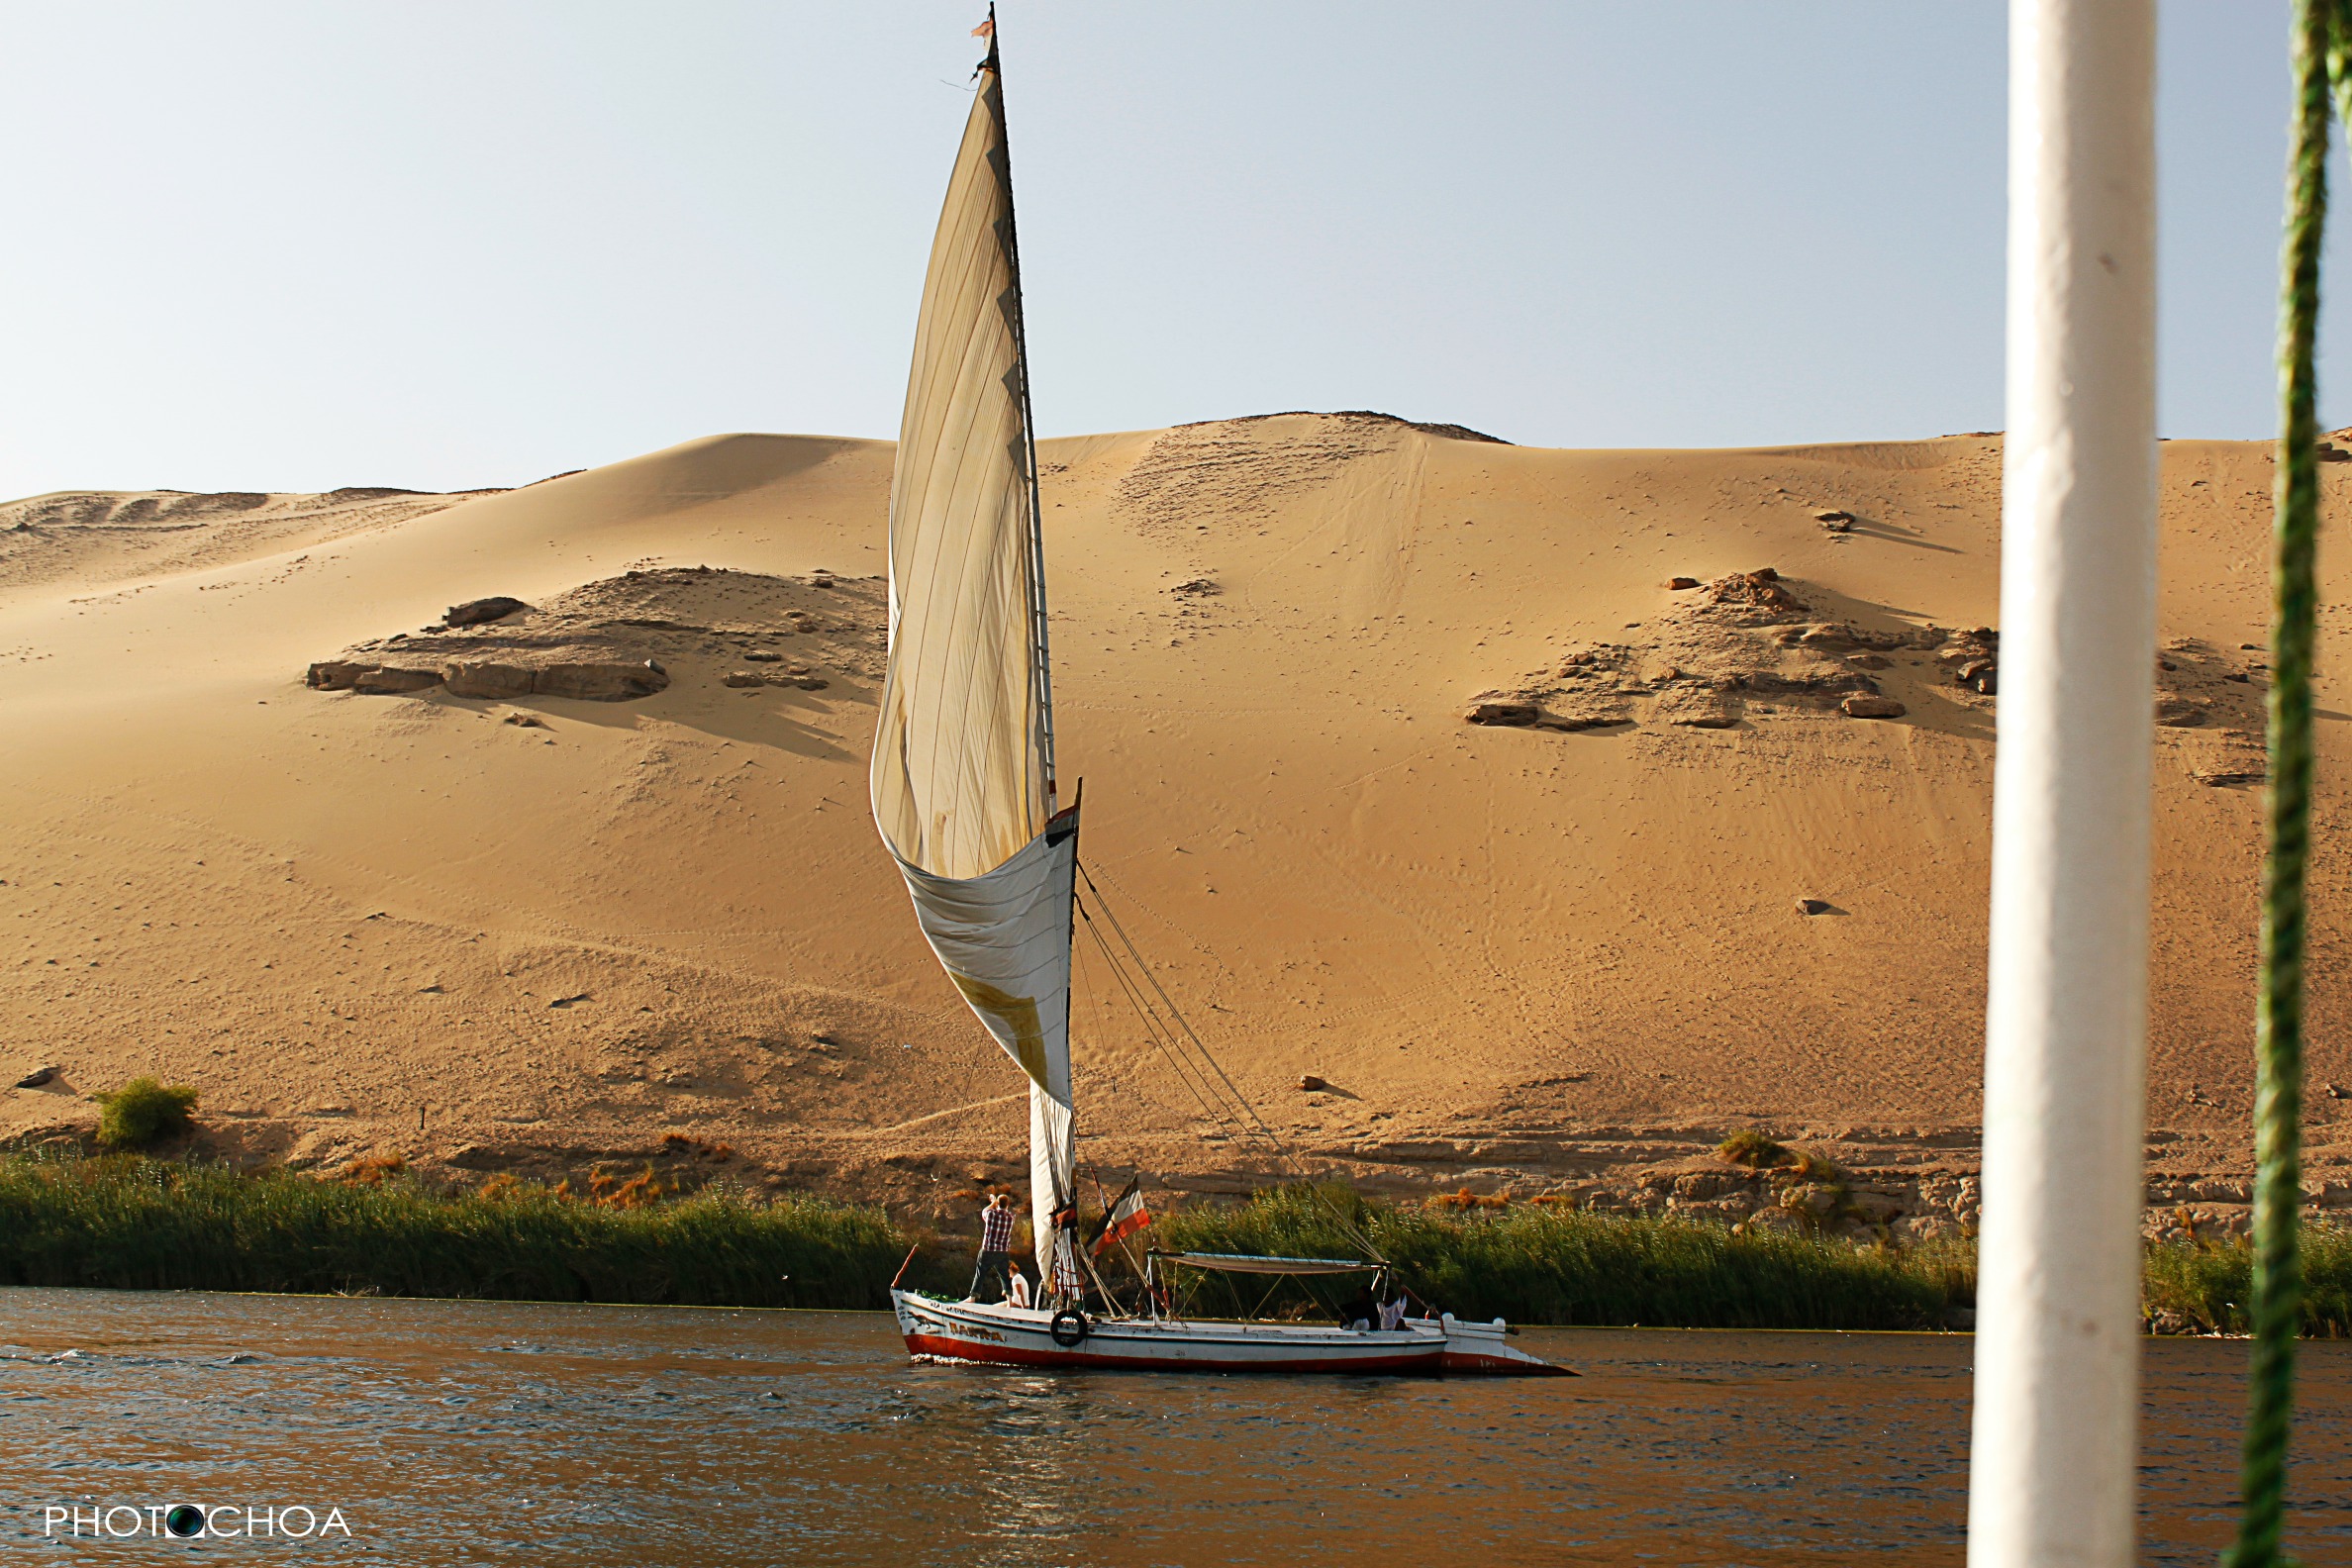 Nile River PHOTOCHOA